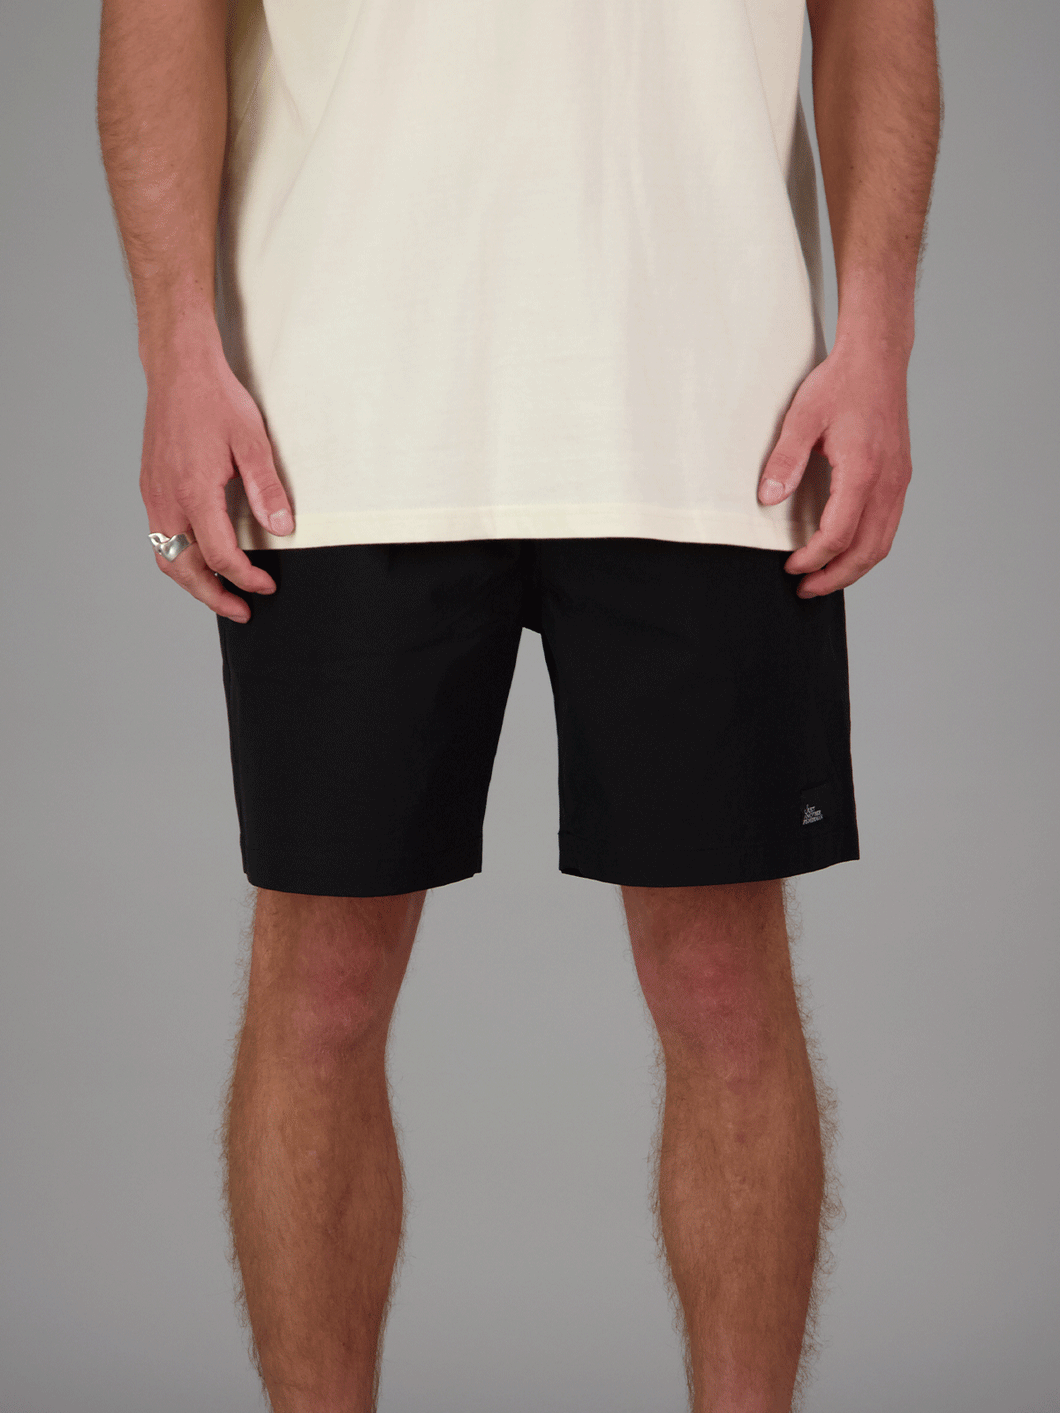 Crewman Shorts- Black